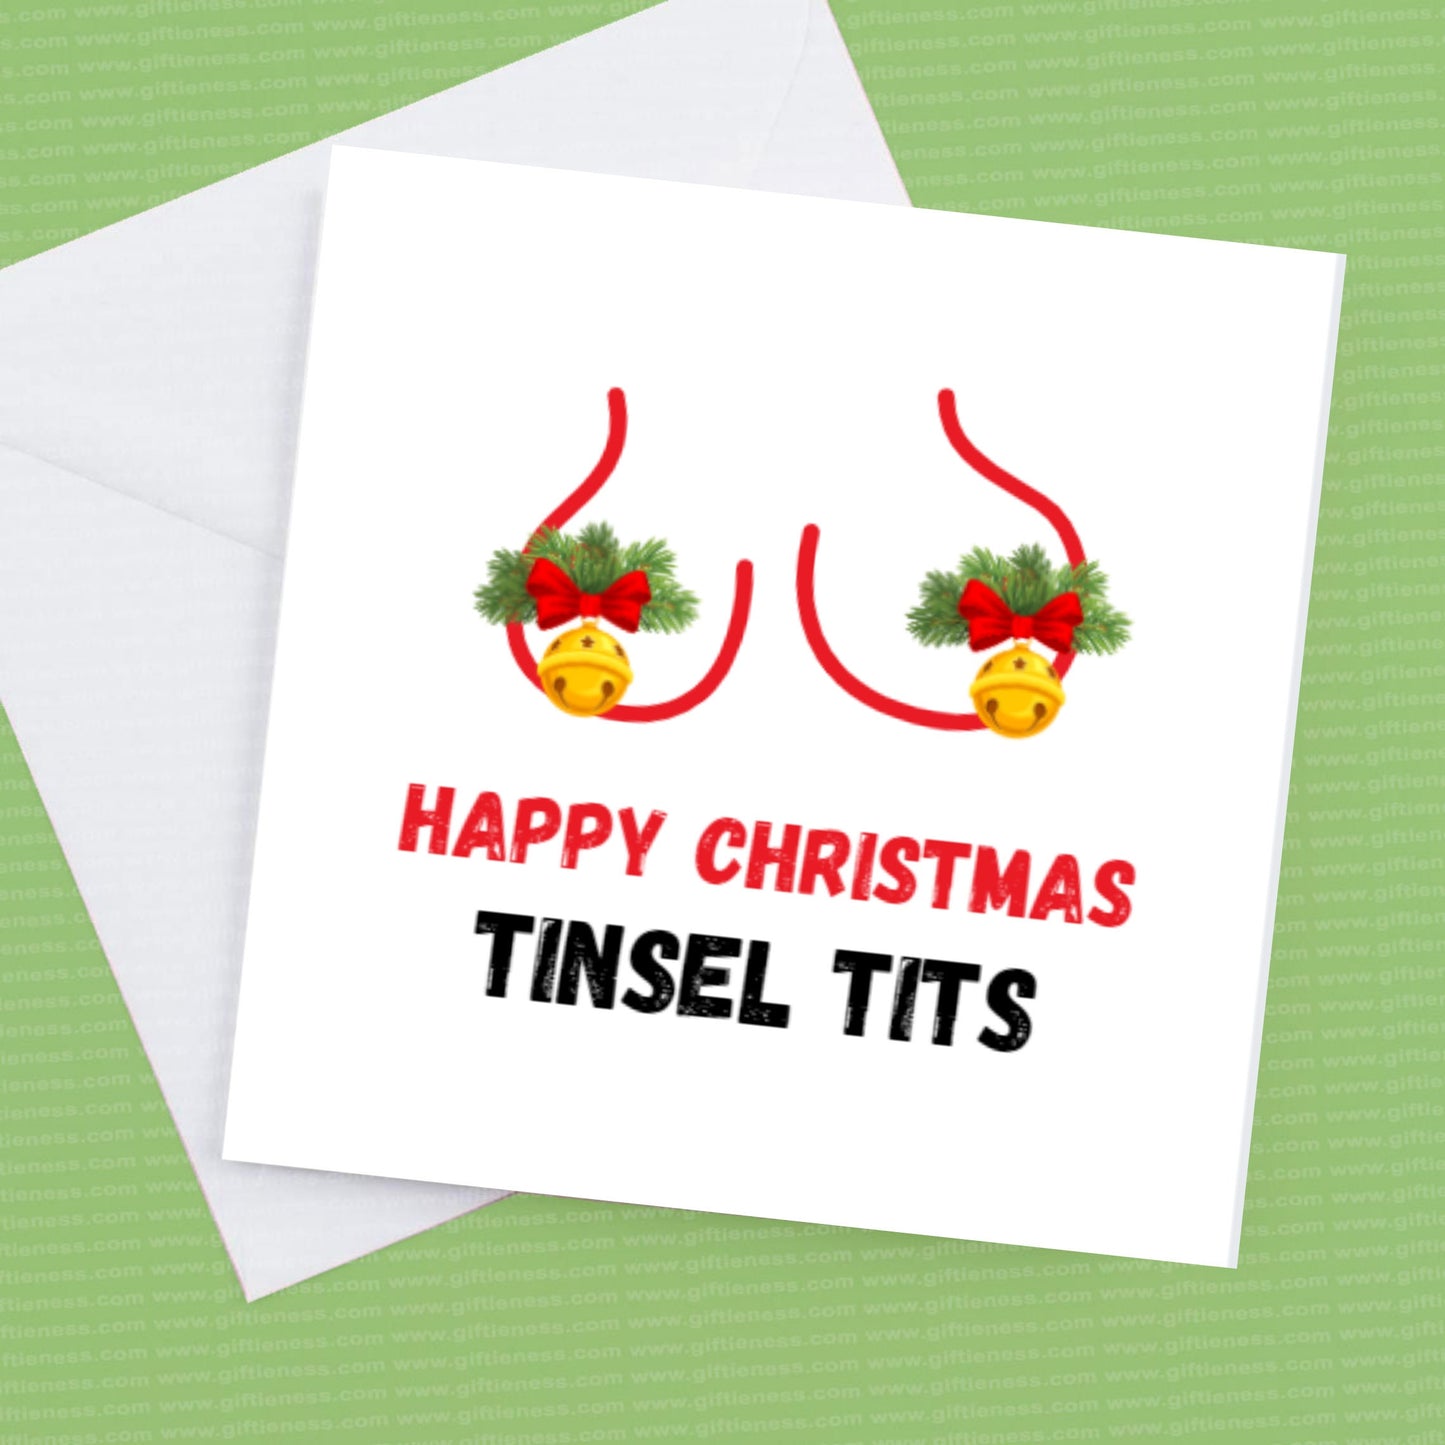 Happy Christmas Tinsel Tits